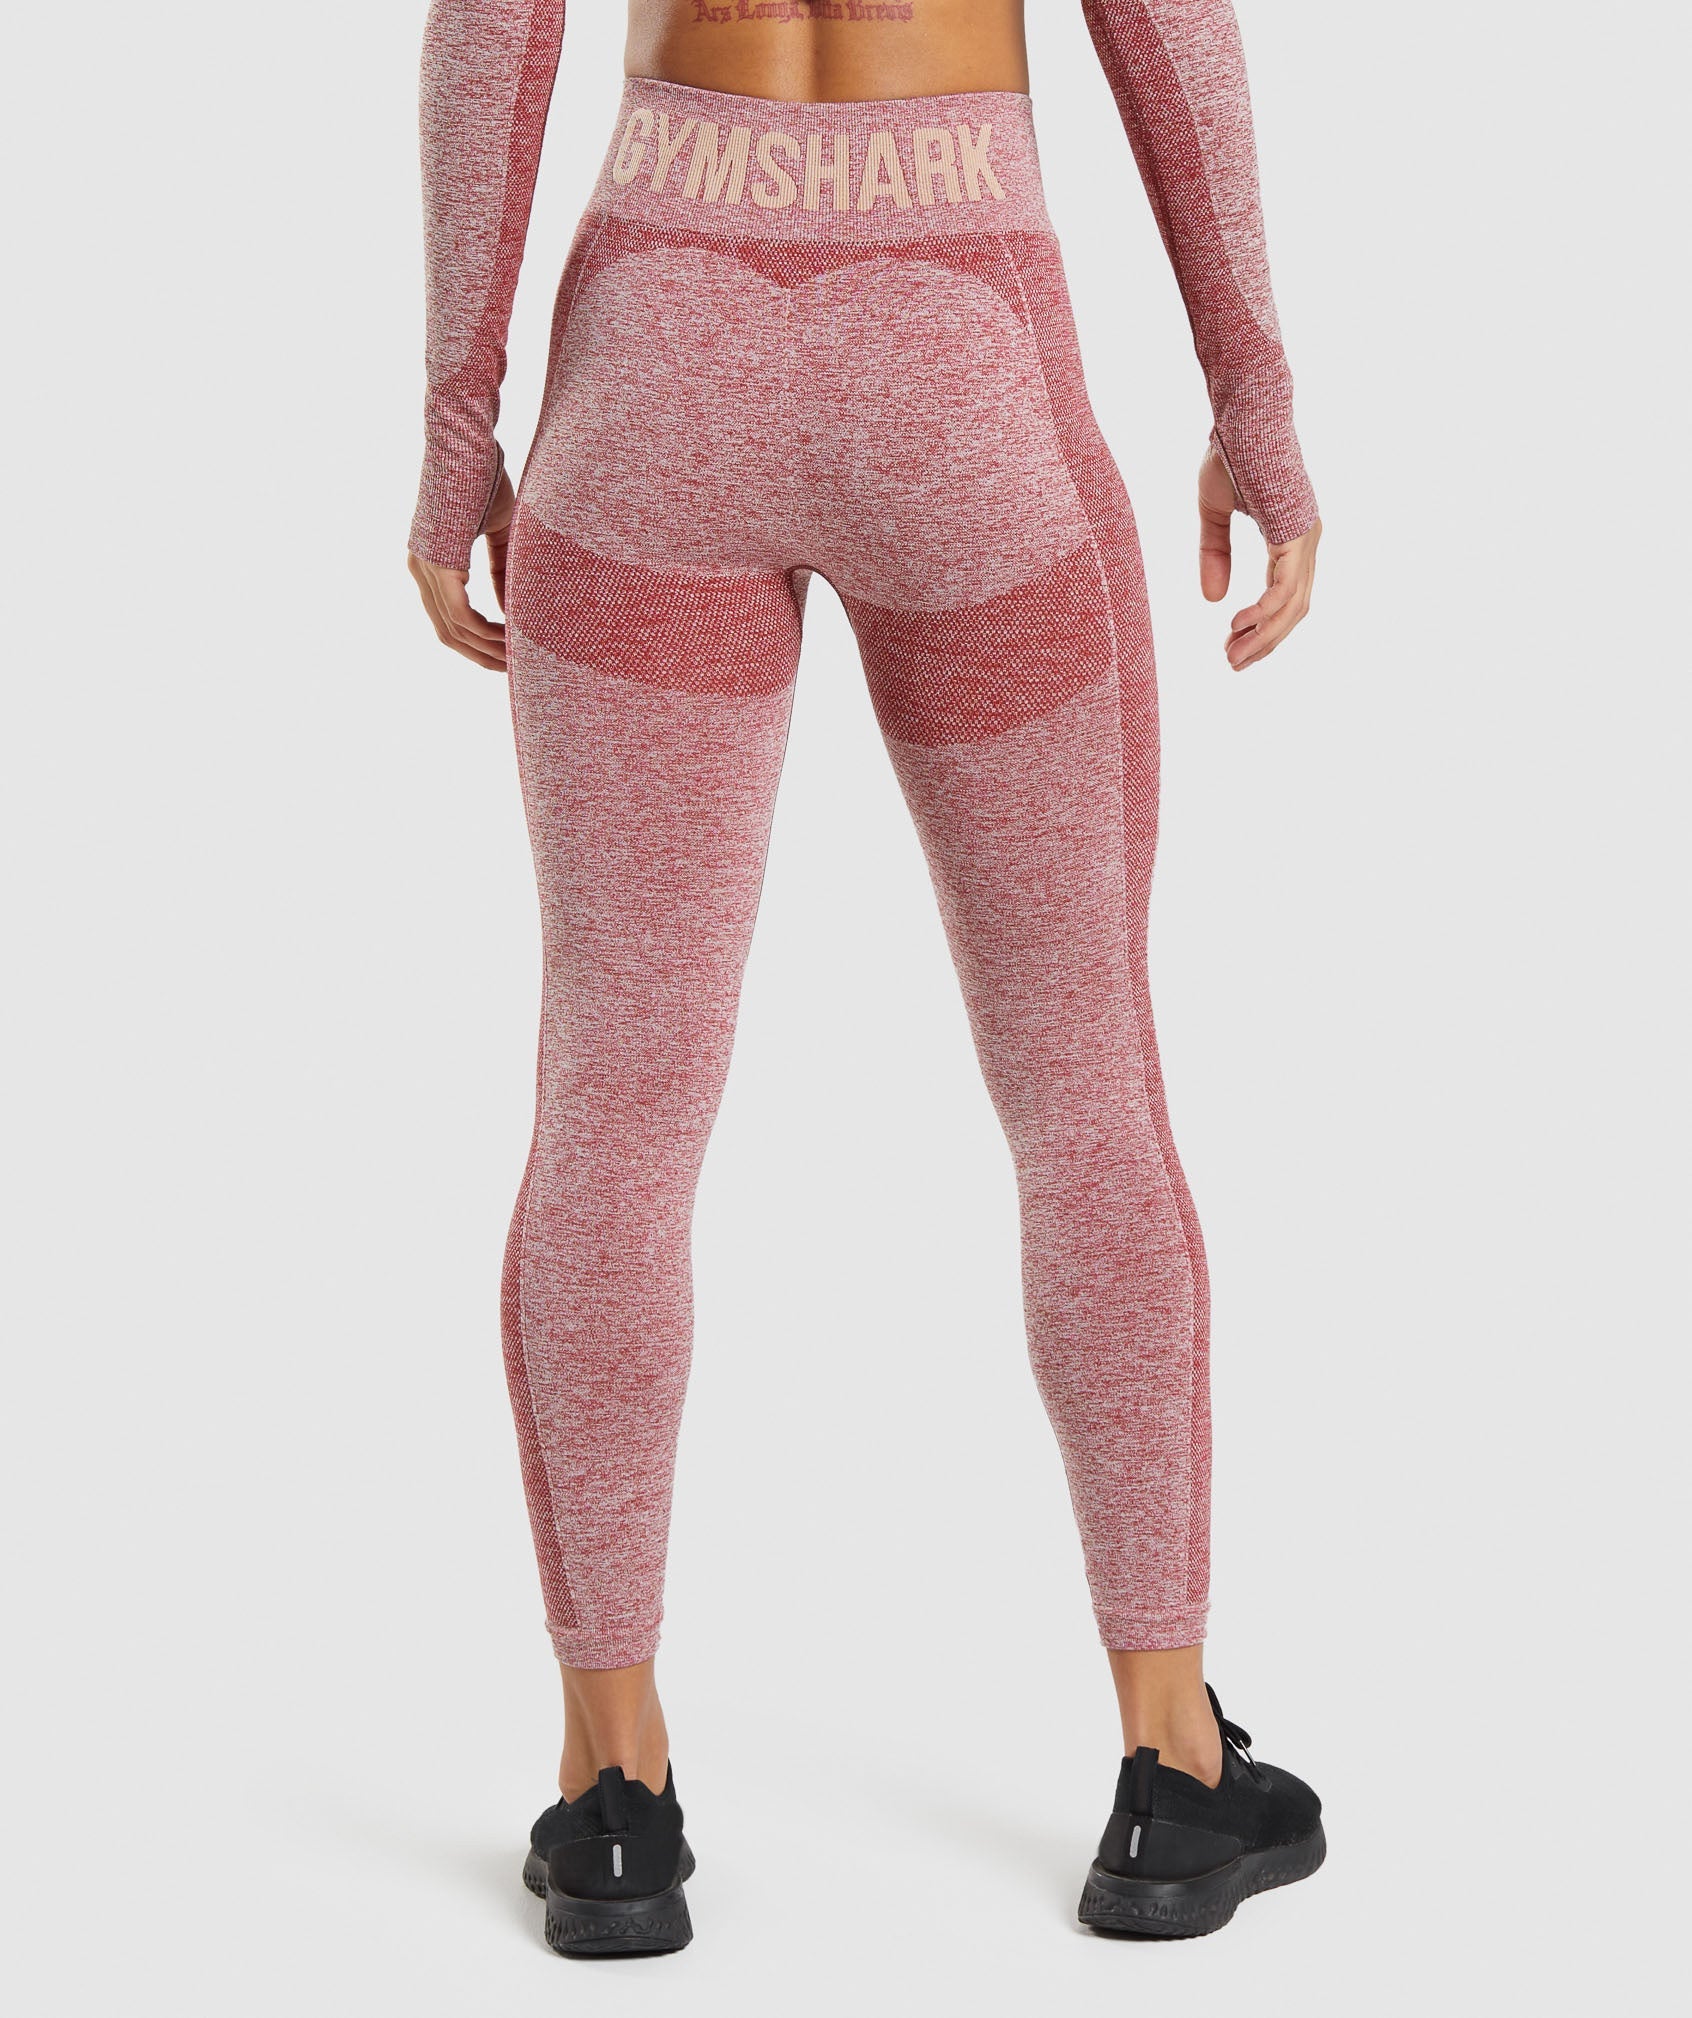 Gymshark flex leggings in beet marl/chalk pink and double up long sleeve in  black